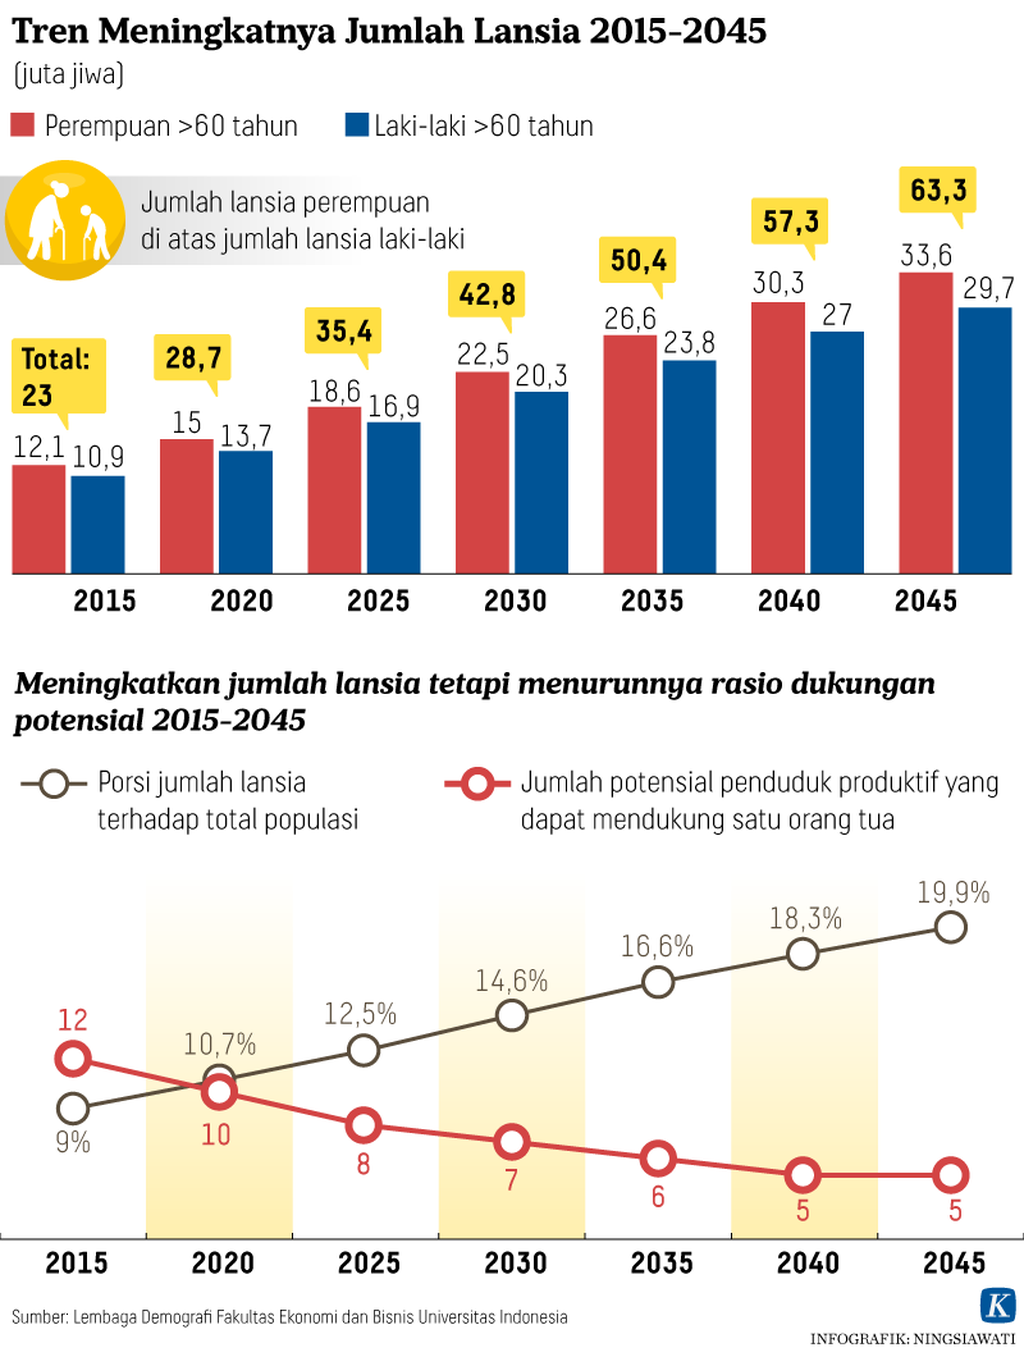 Infografik Kompas.id Orang Tua Lansia Grafik 1 Tren Meningkatnya Jumlah Lansia 2015-2045.